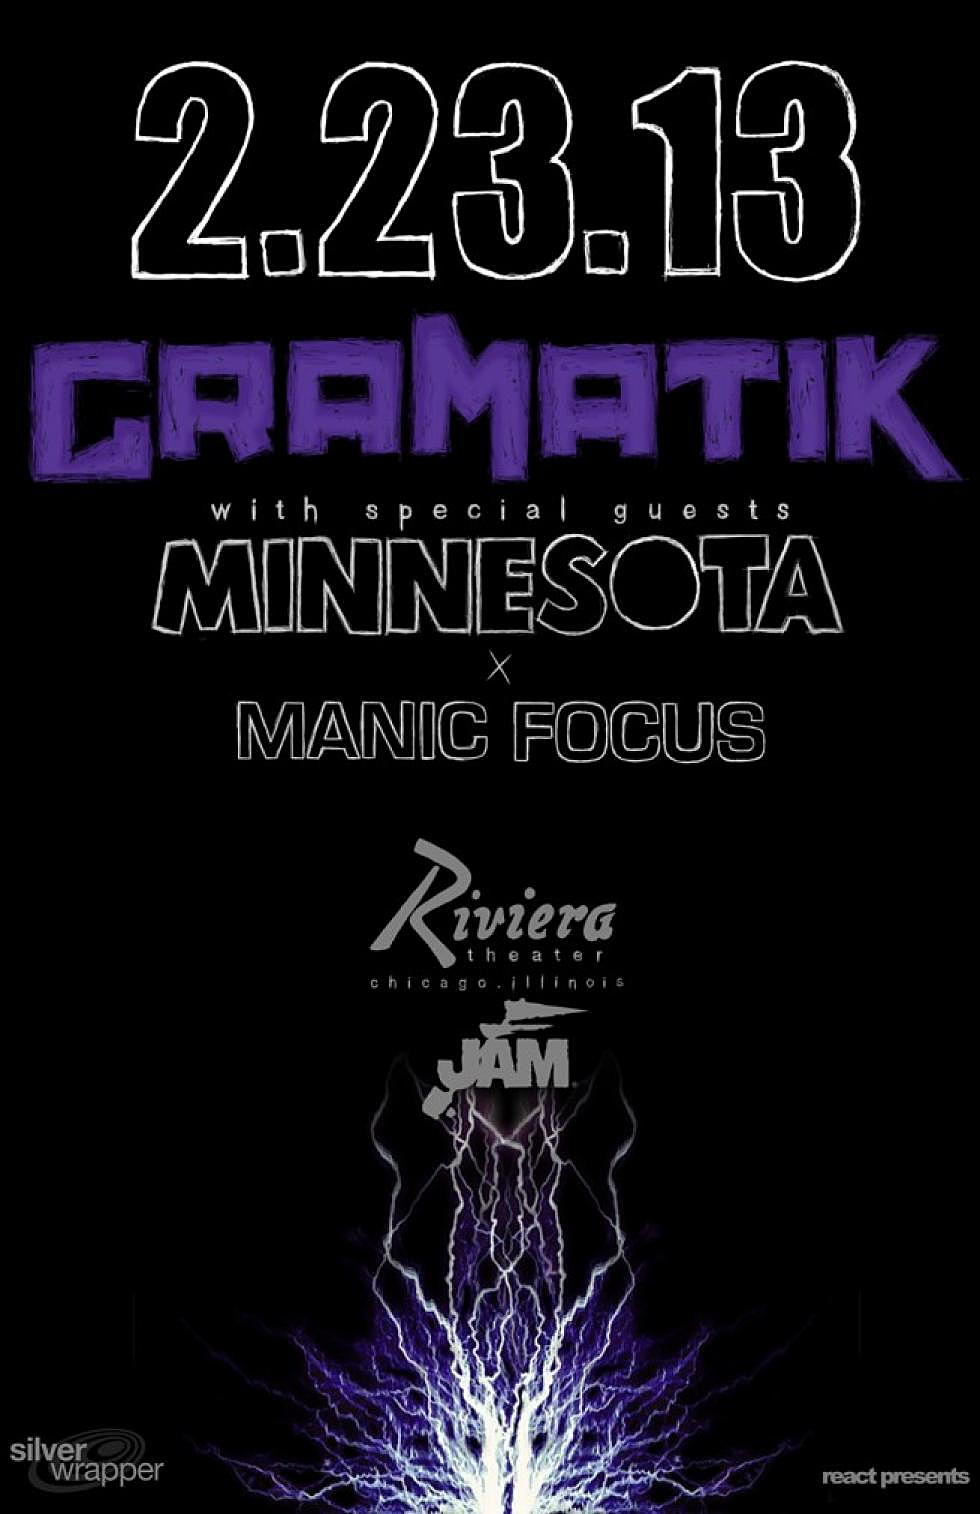 React Presents Gramatik/Minnesota at the Riviera Theater February 23rd